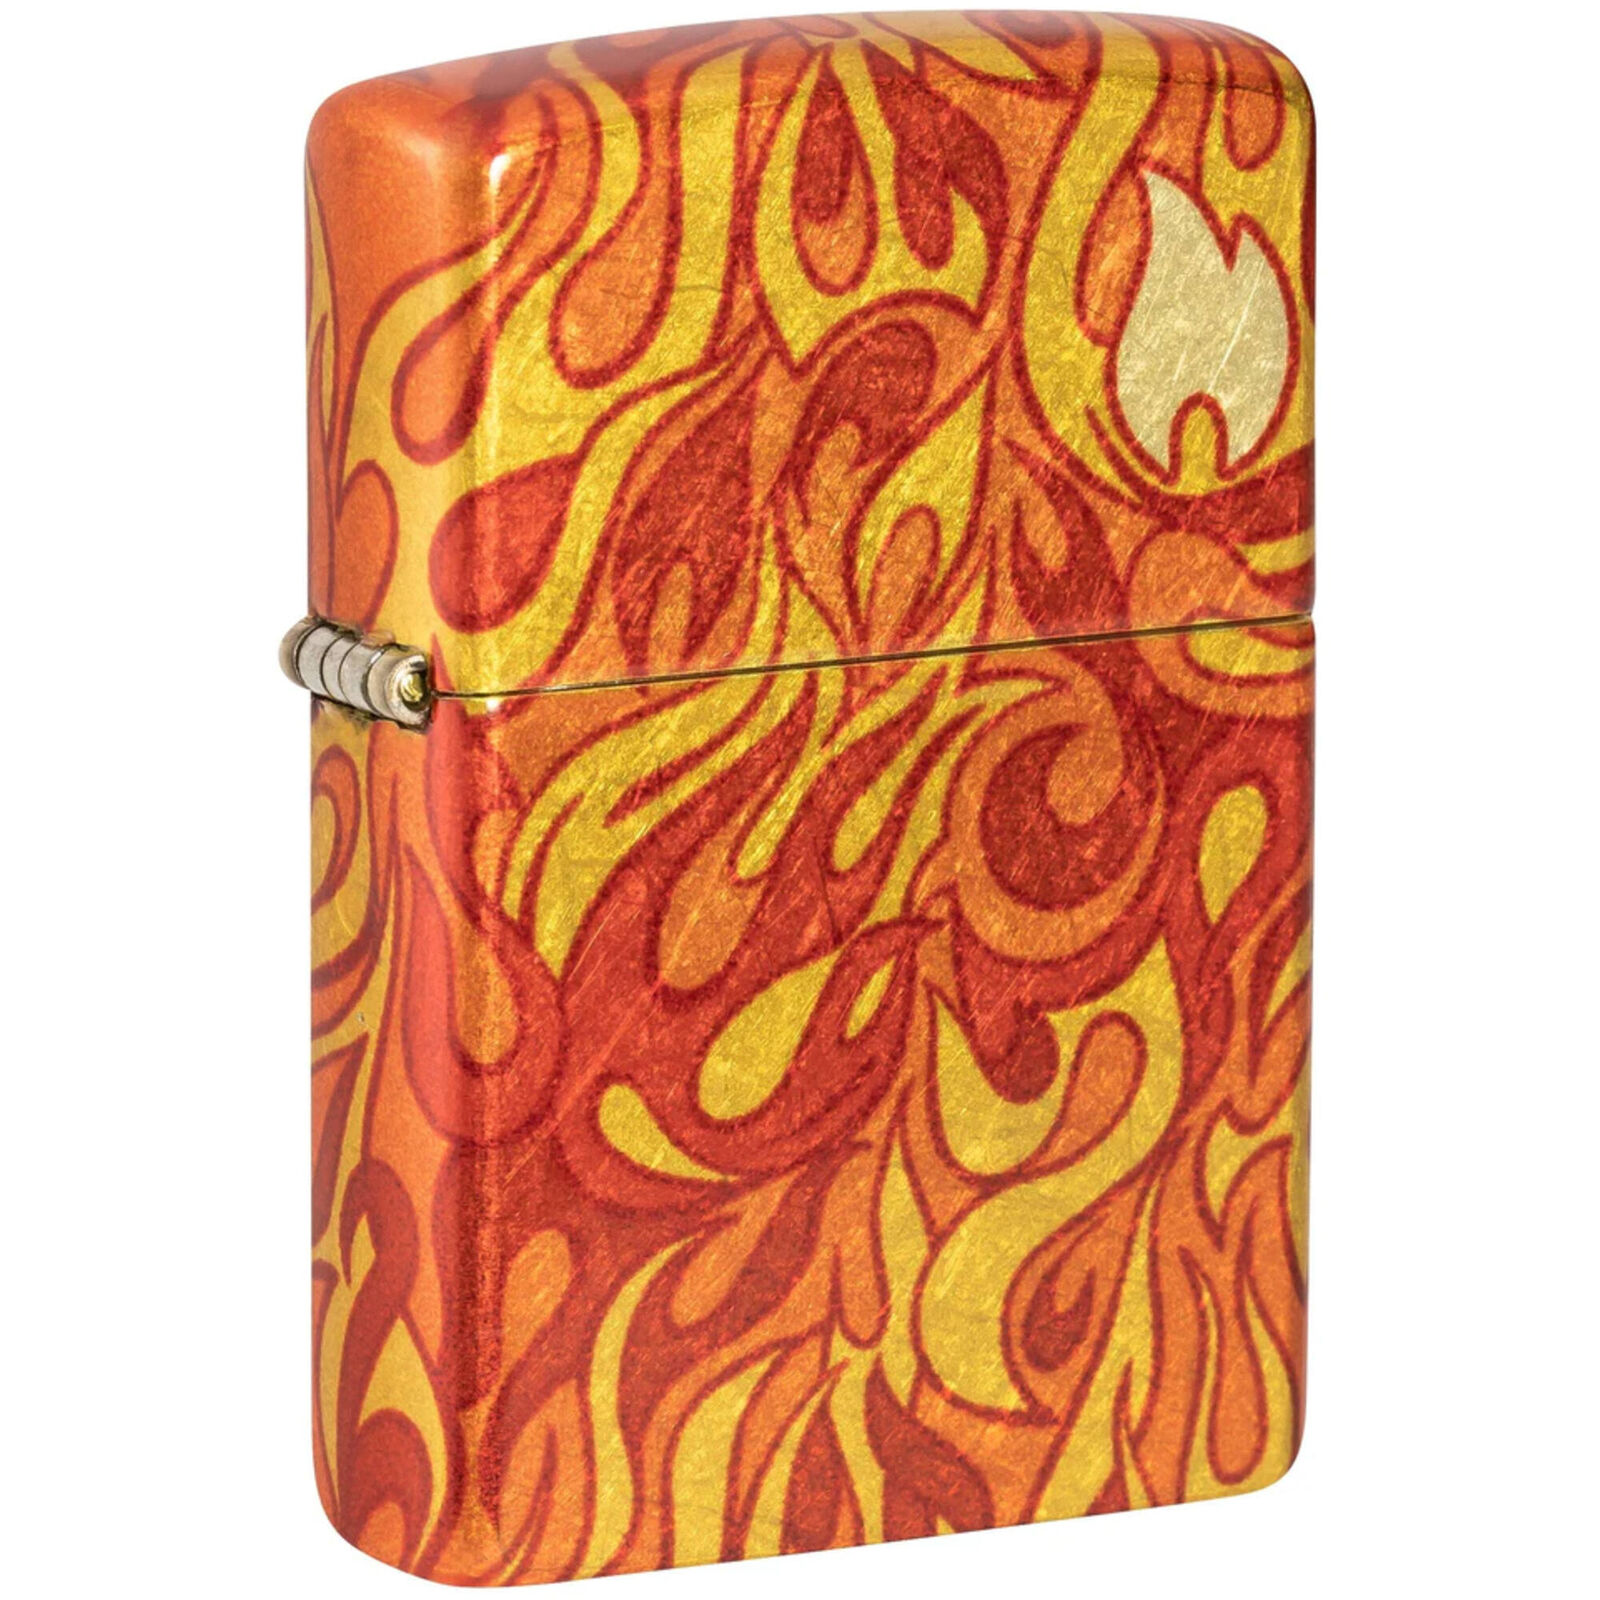 Zippo Windproof Lighter Flickering Flames Fiery Design 540 Tumbled Brass 48981